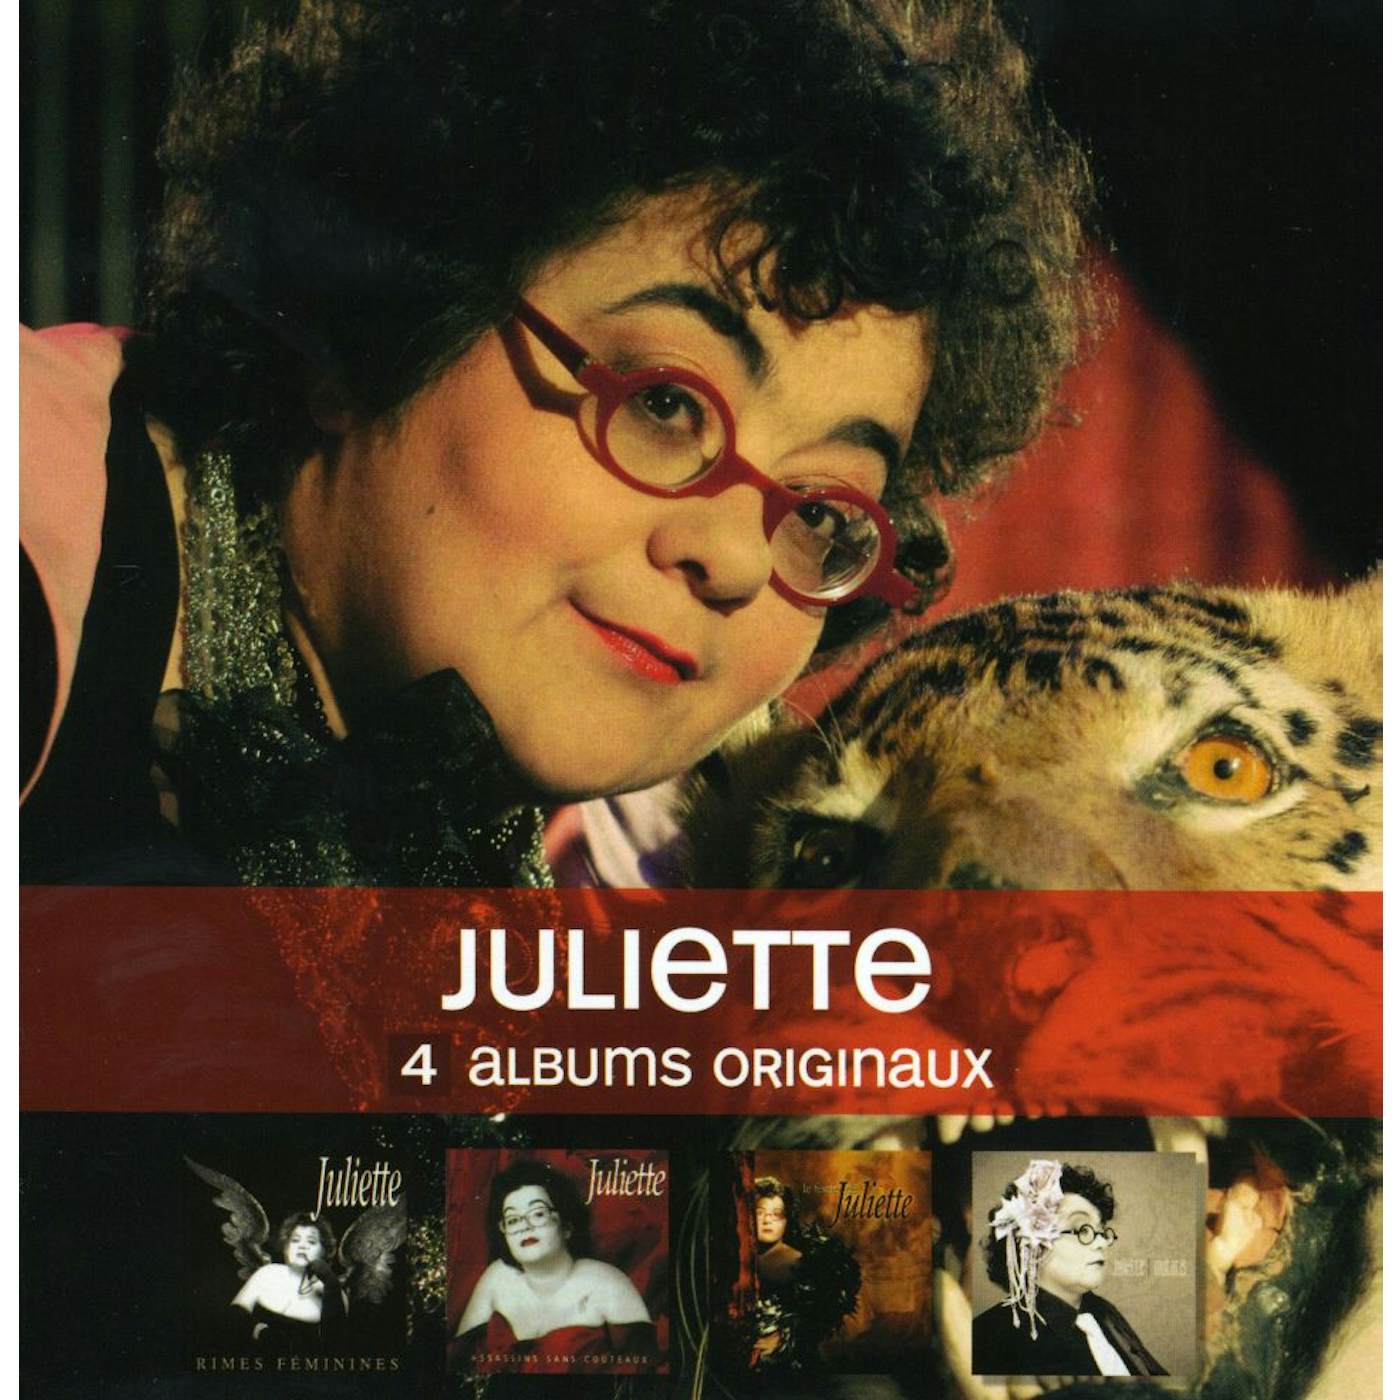 Juliette 4 ORIGINAL ALBUMS CD